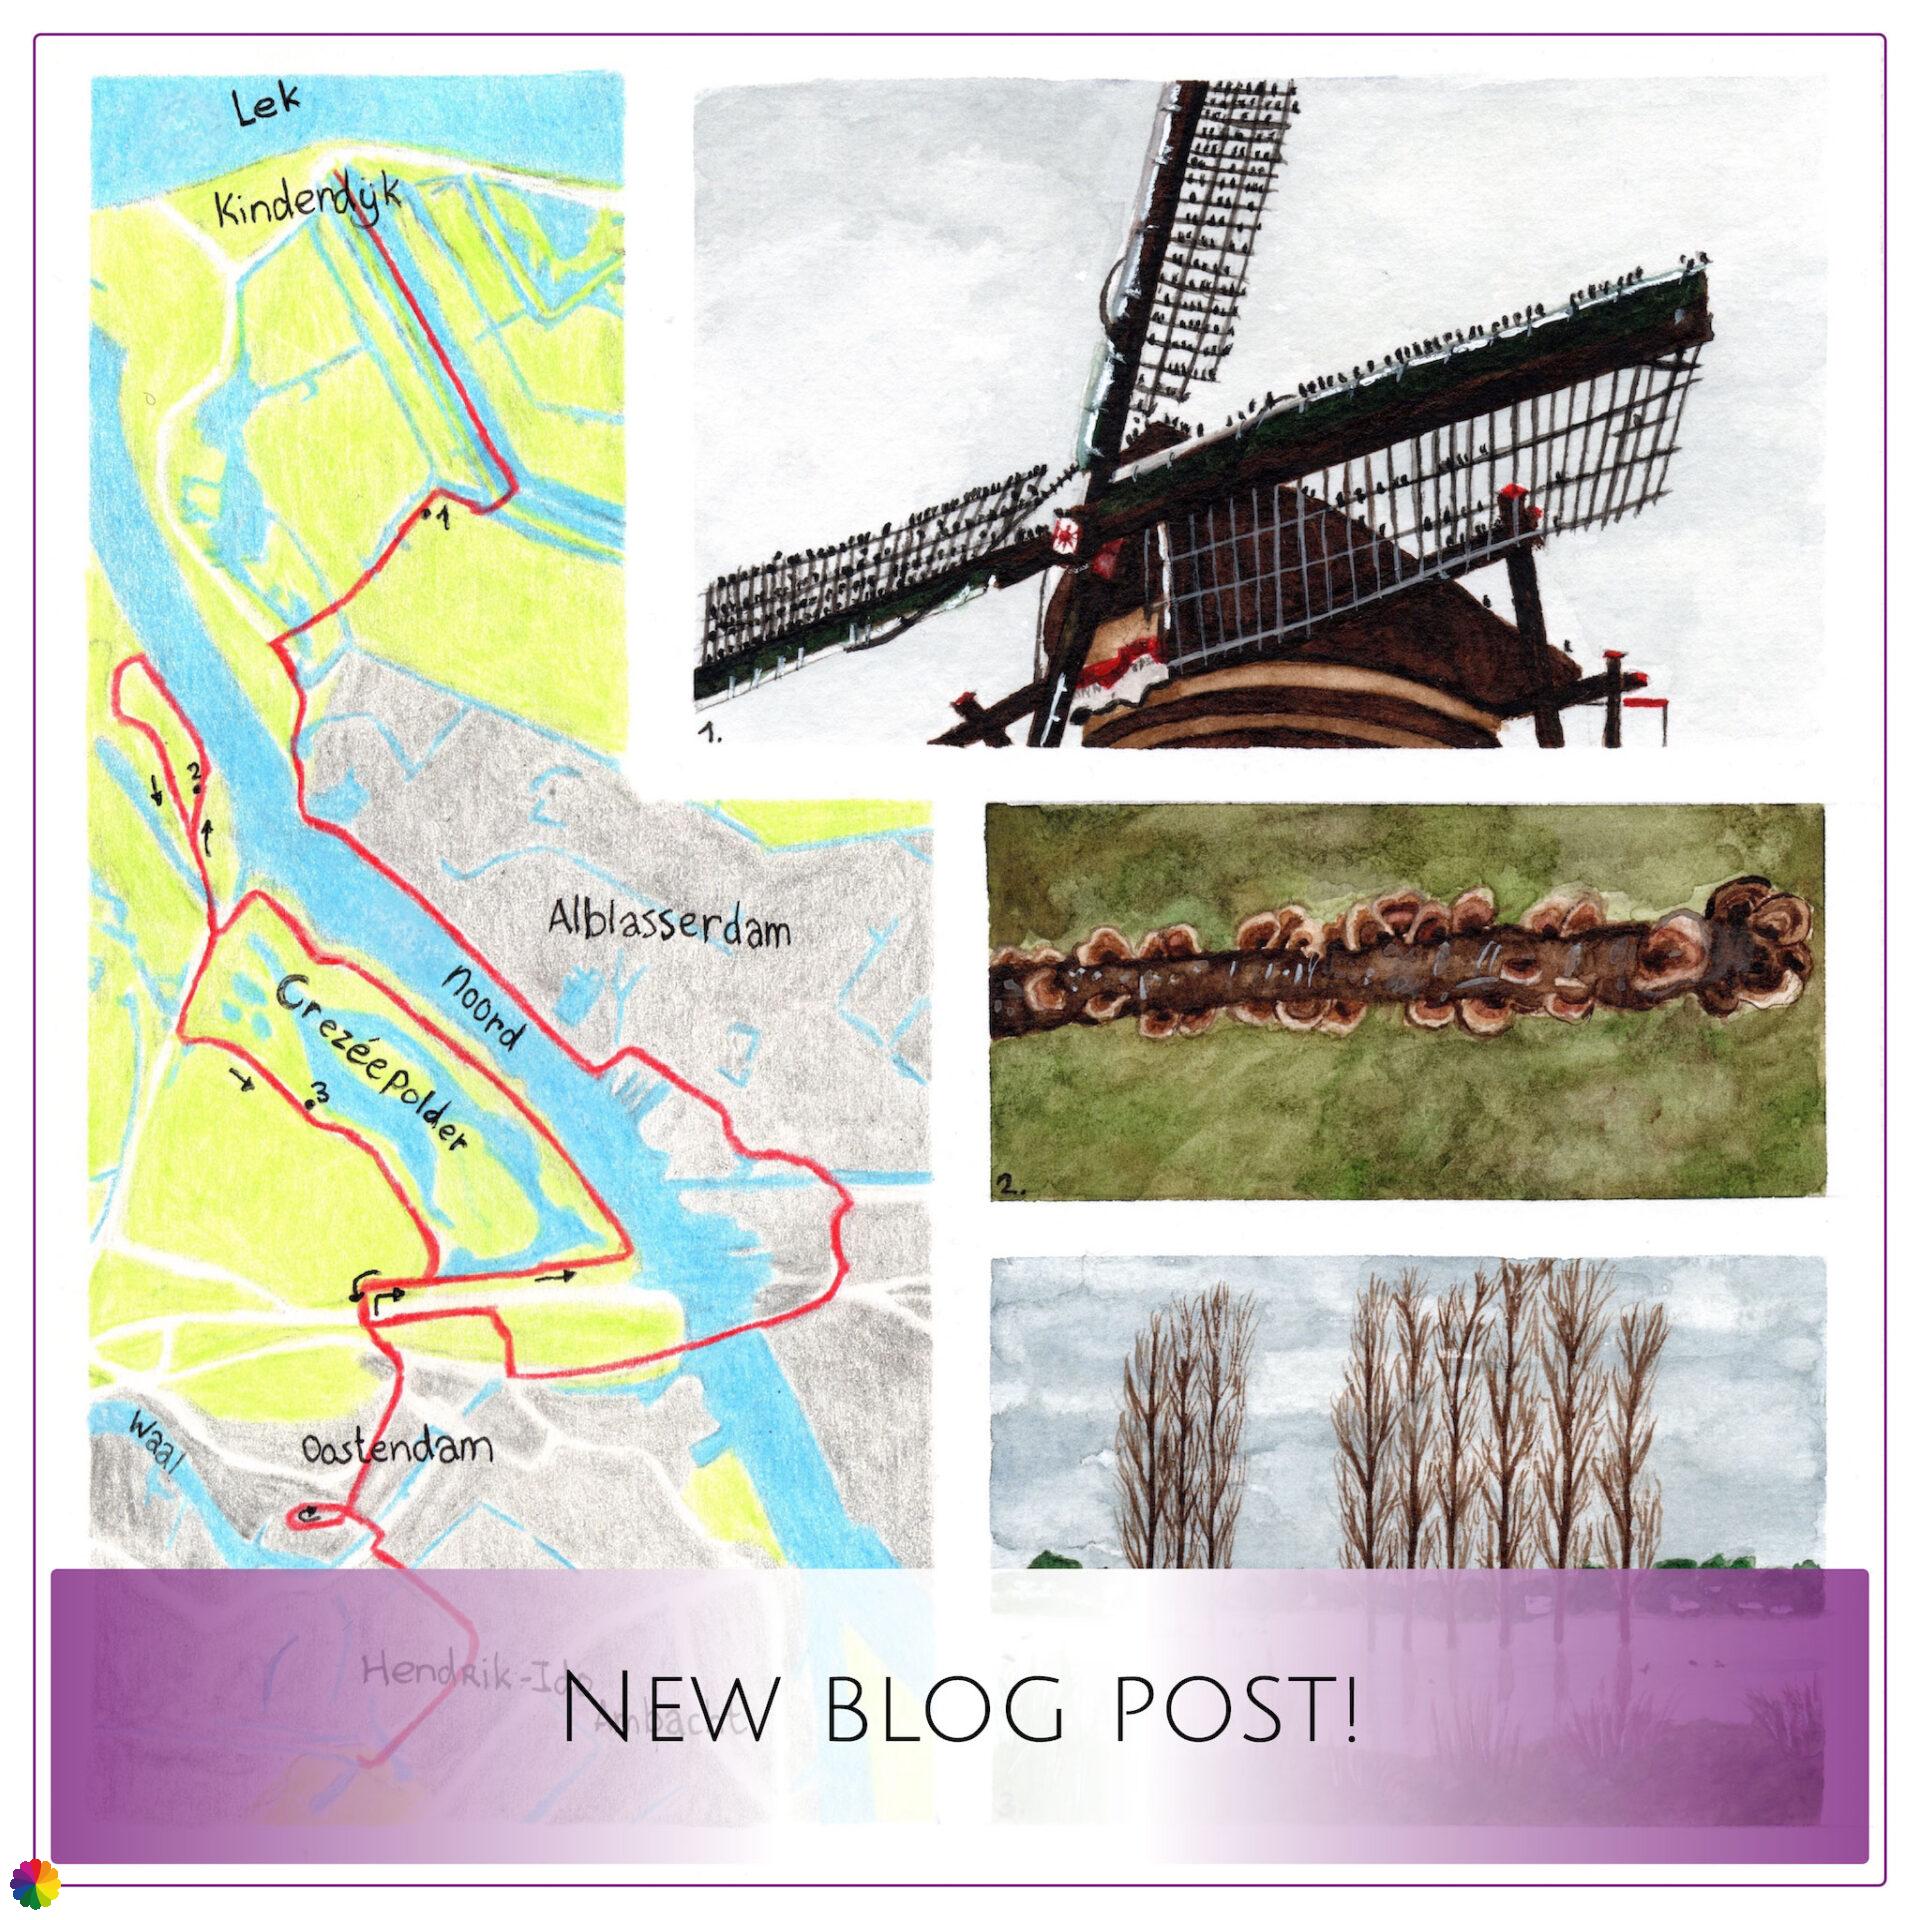 Blog update Great rivers trail Kinderdijk - Hendrik-Ido Ambacht